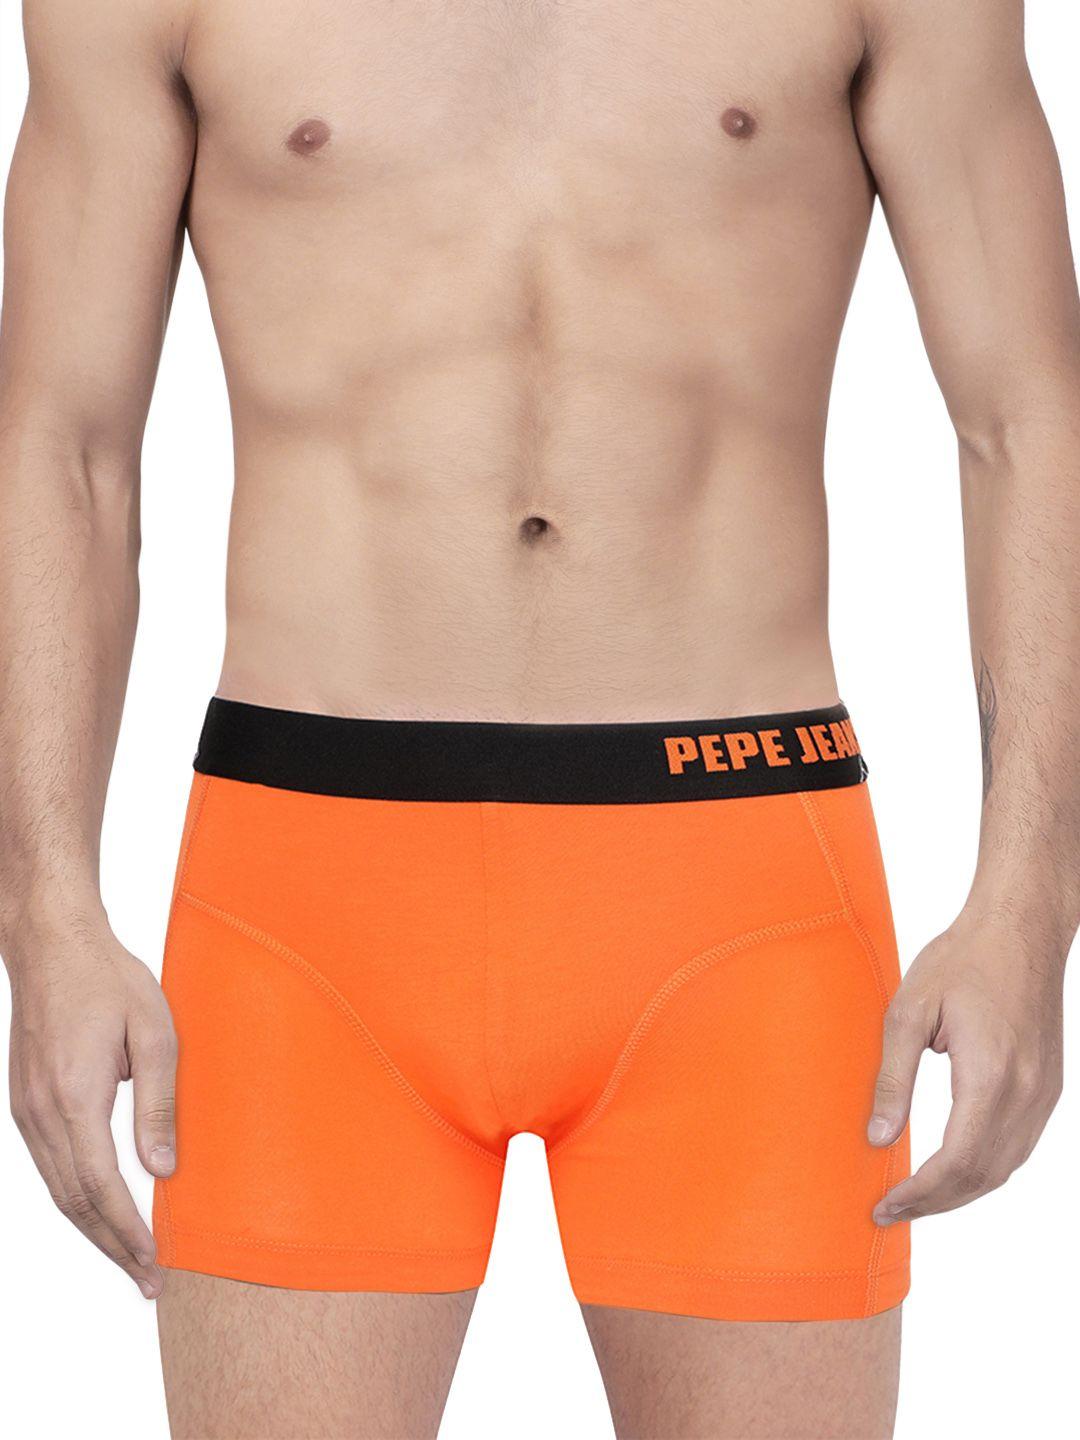 pepe-jeans-men-orange-solid-mod-trunks-8904311304272